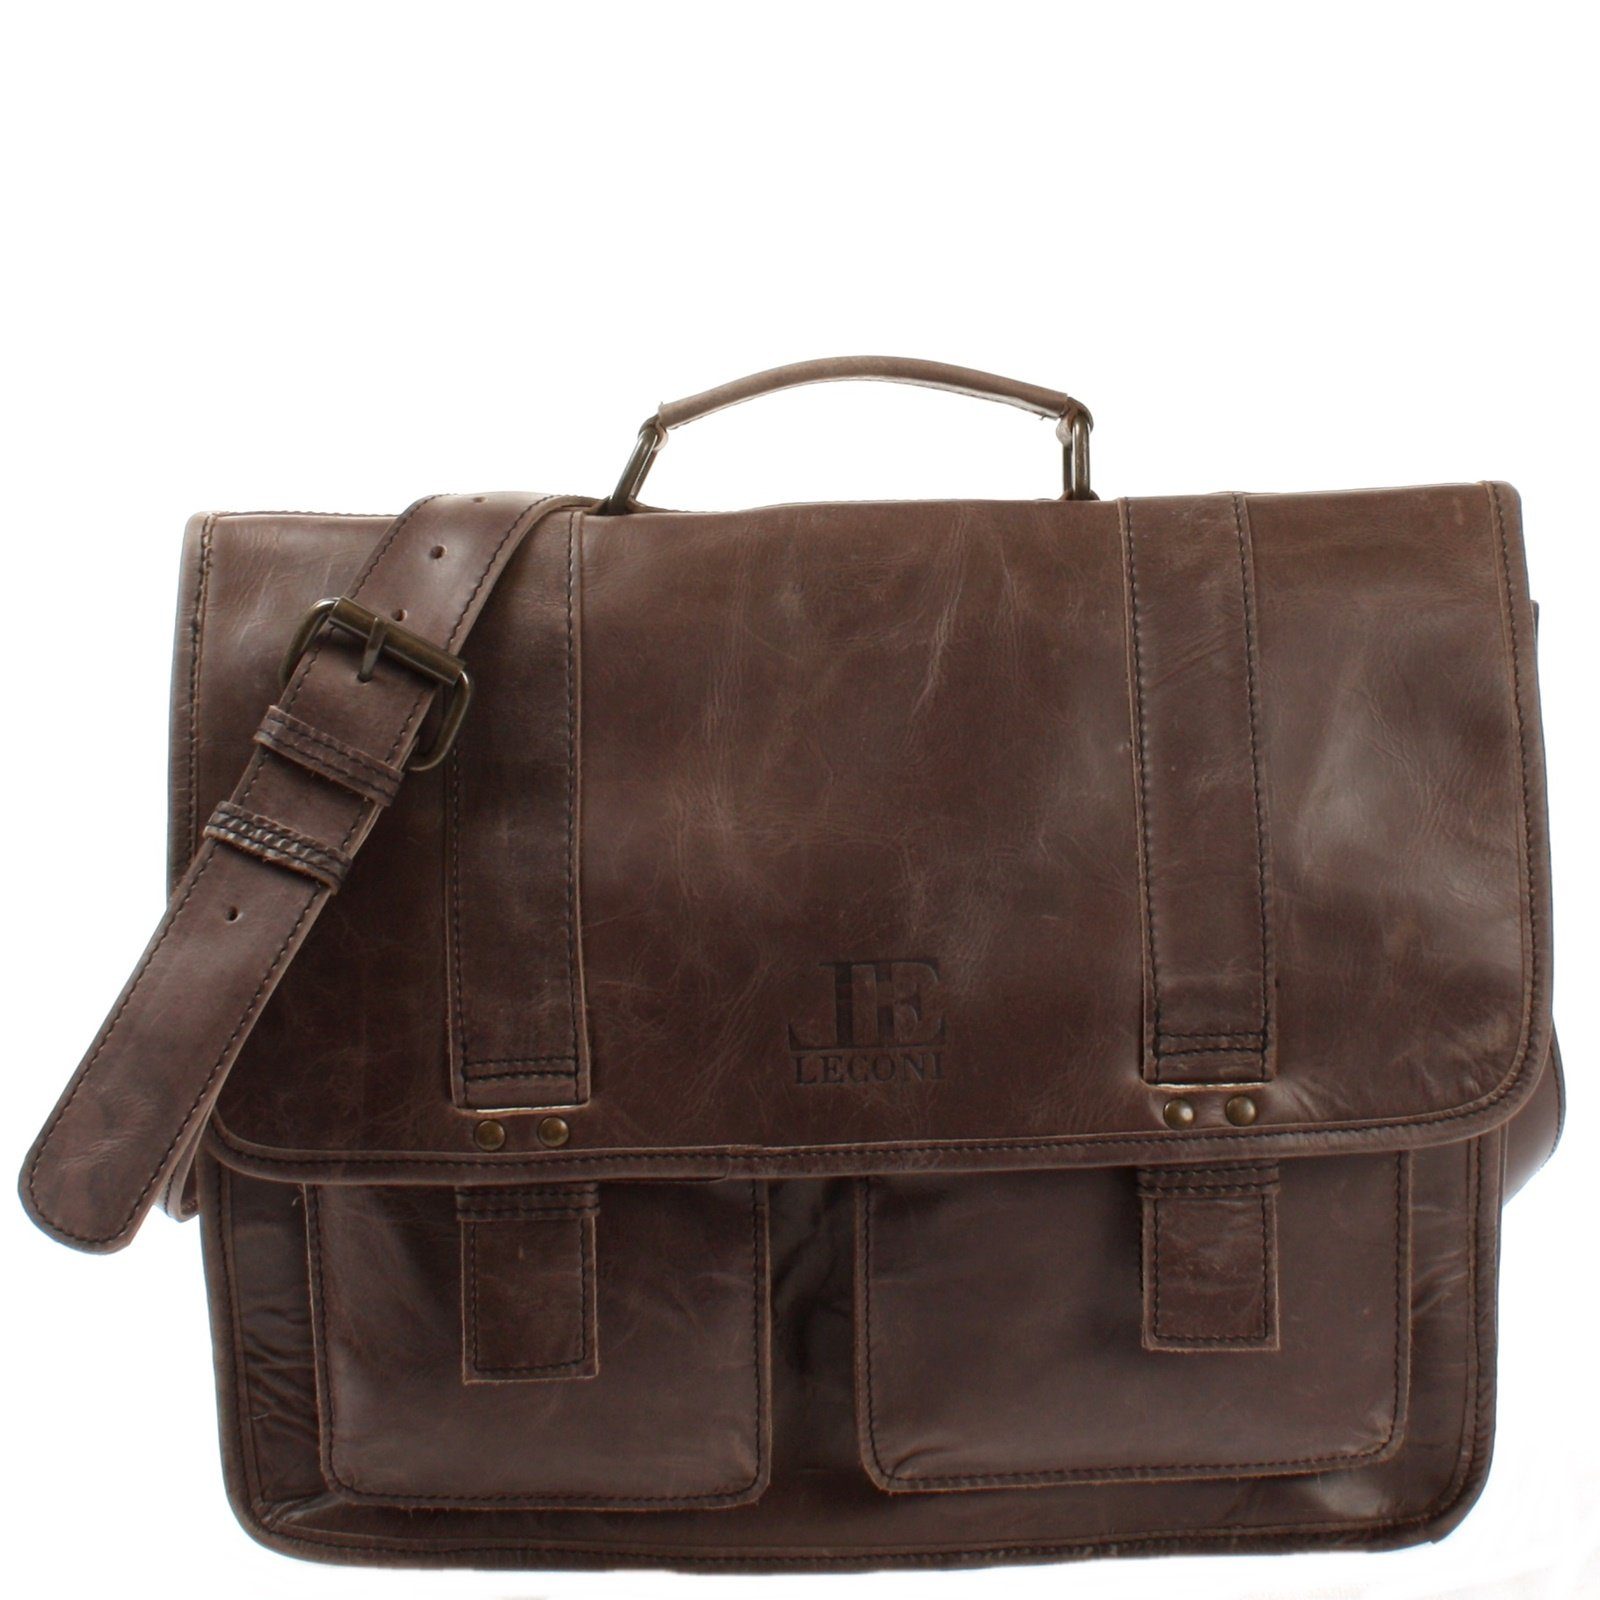 LECONI Aktentasche große Arbeitstasche Businesstasche Messenger Bags Leder LE3030 dunkeltaupe